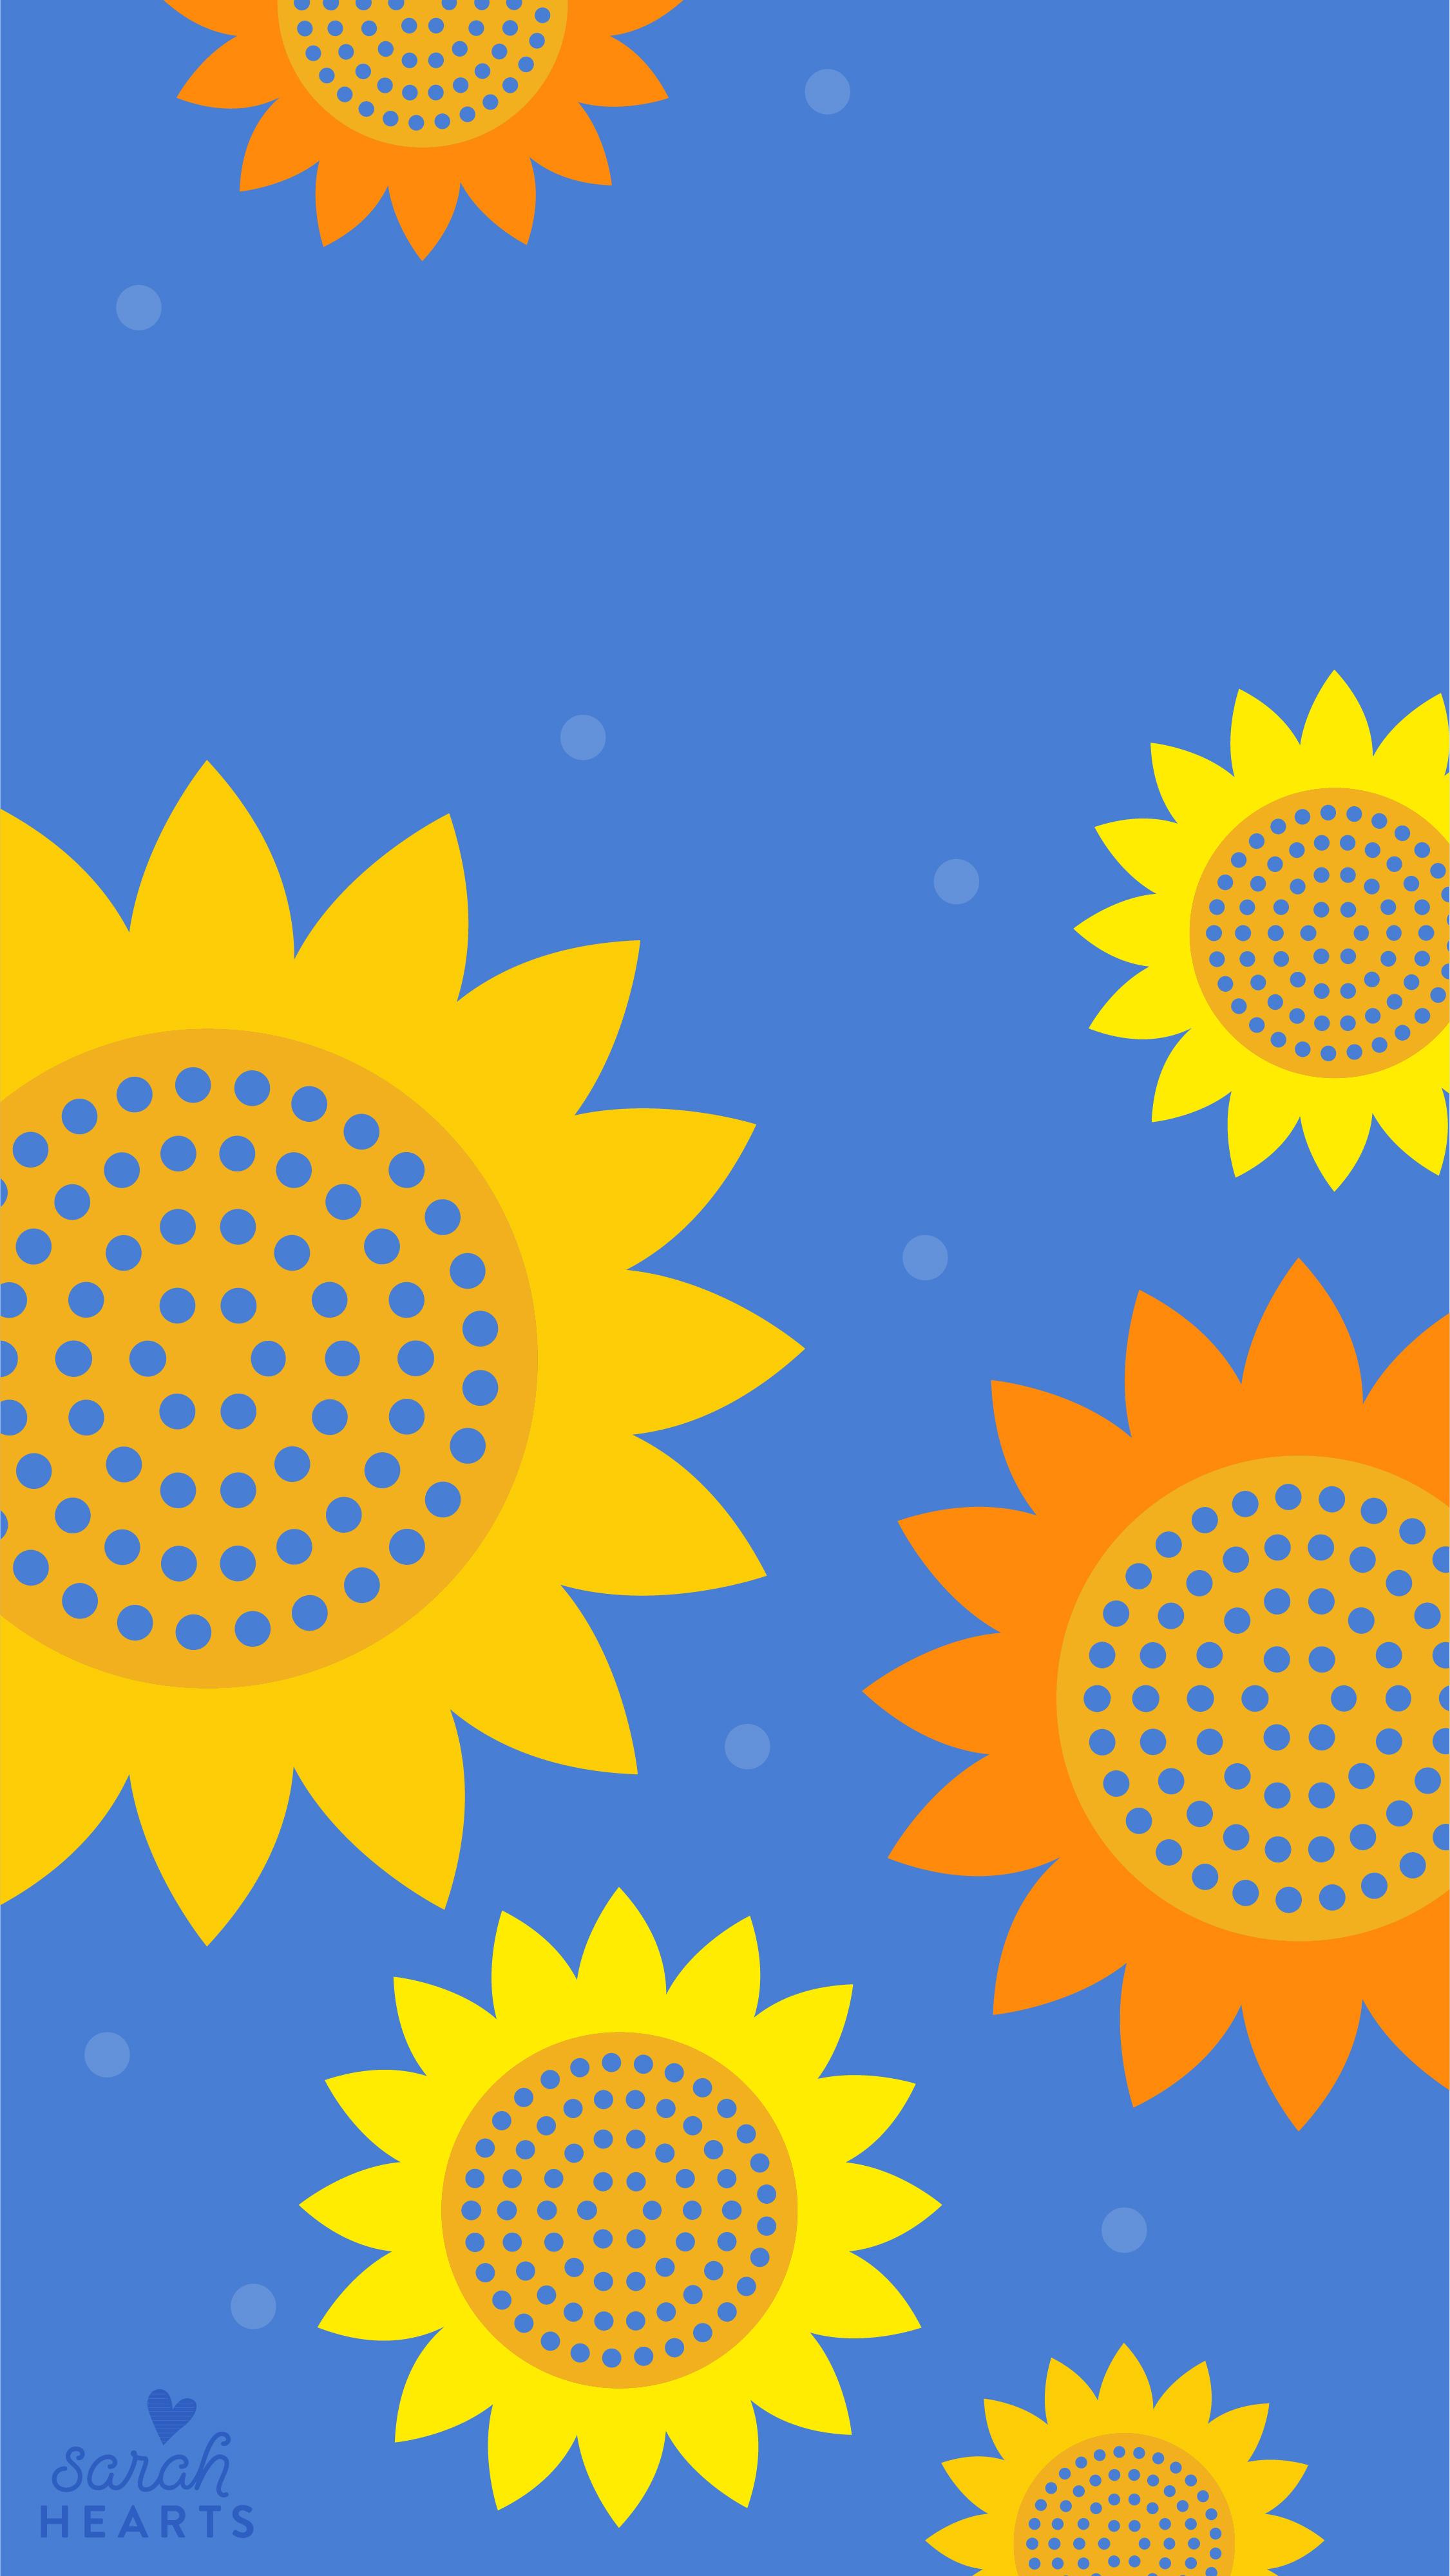 September 2018 Sunflower Calendar Wallpaper